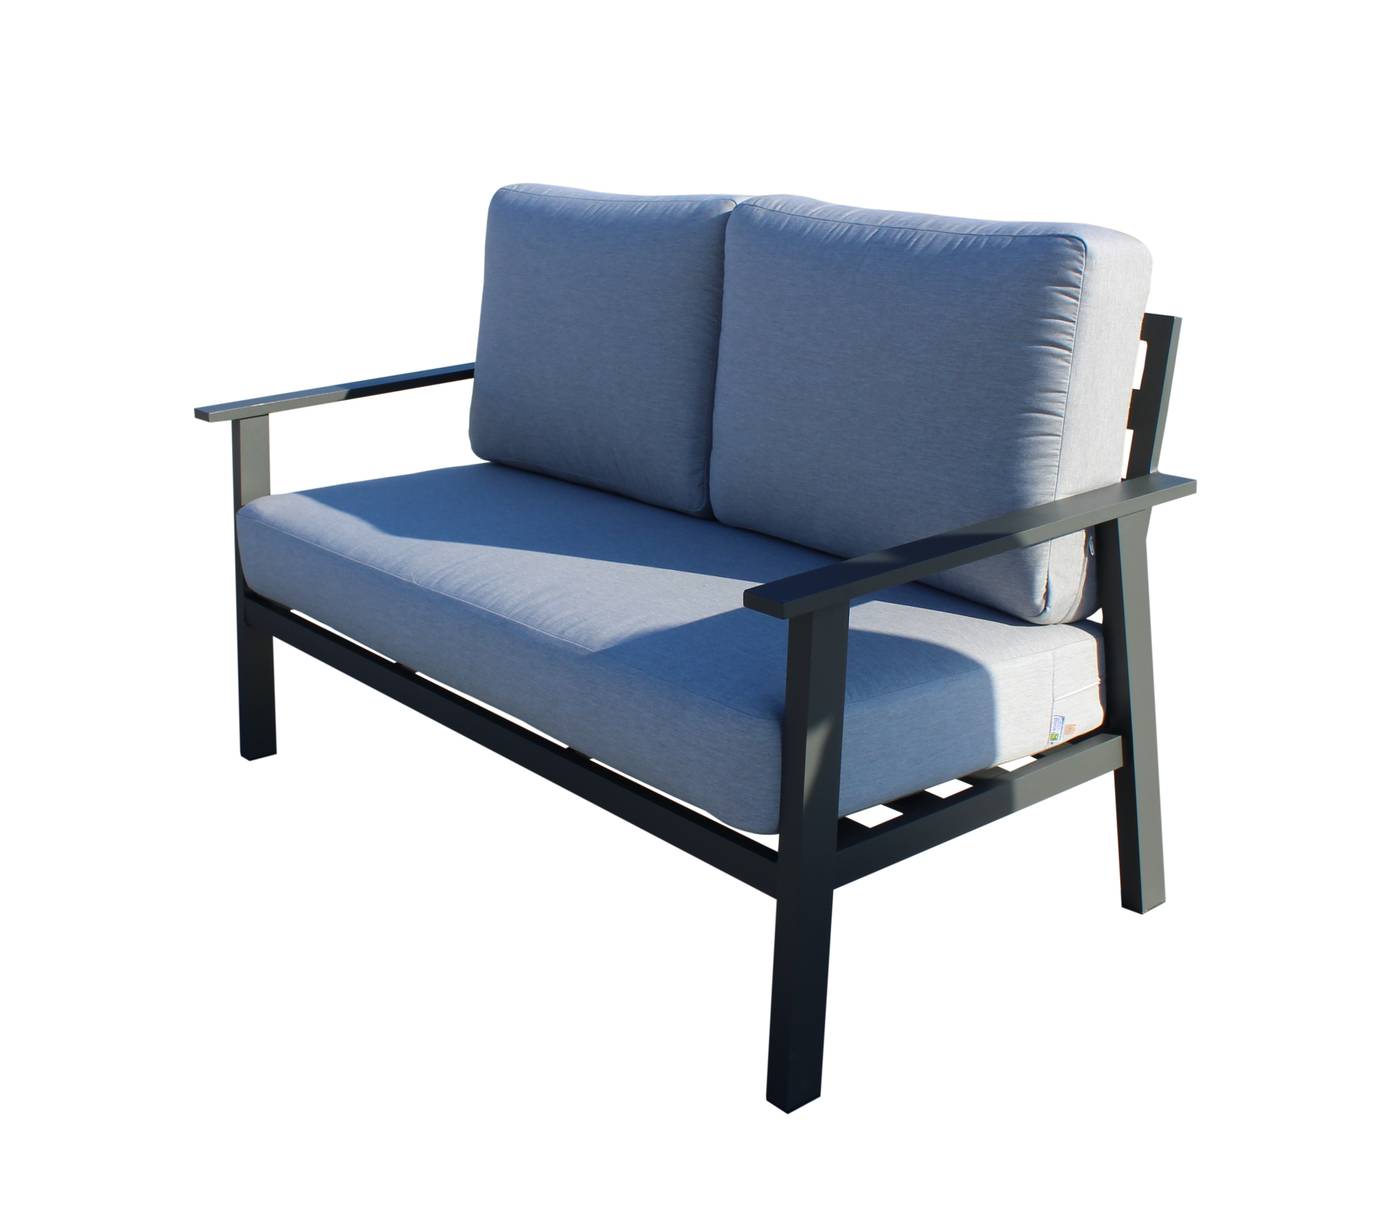 Set Aluminio Eliot-9 - Conjunto aluminio: sofá 2 plazas + 2 sillones + mesa de centro + 2 taburetes. Fabricado de aluminio en color blanco o antracita.